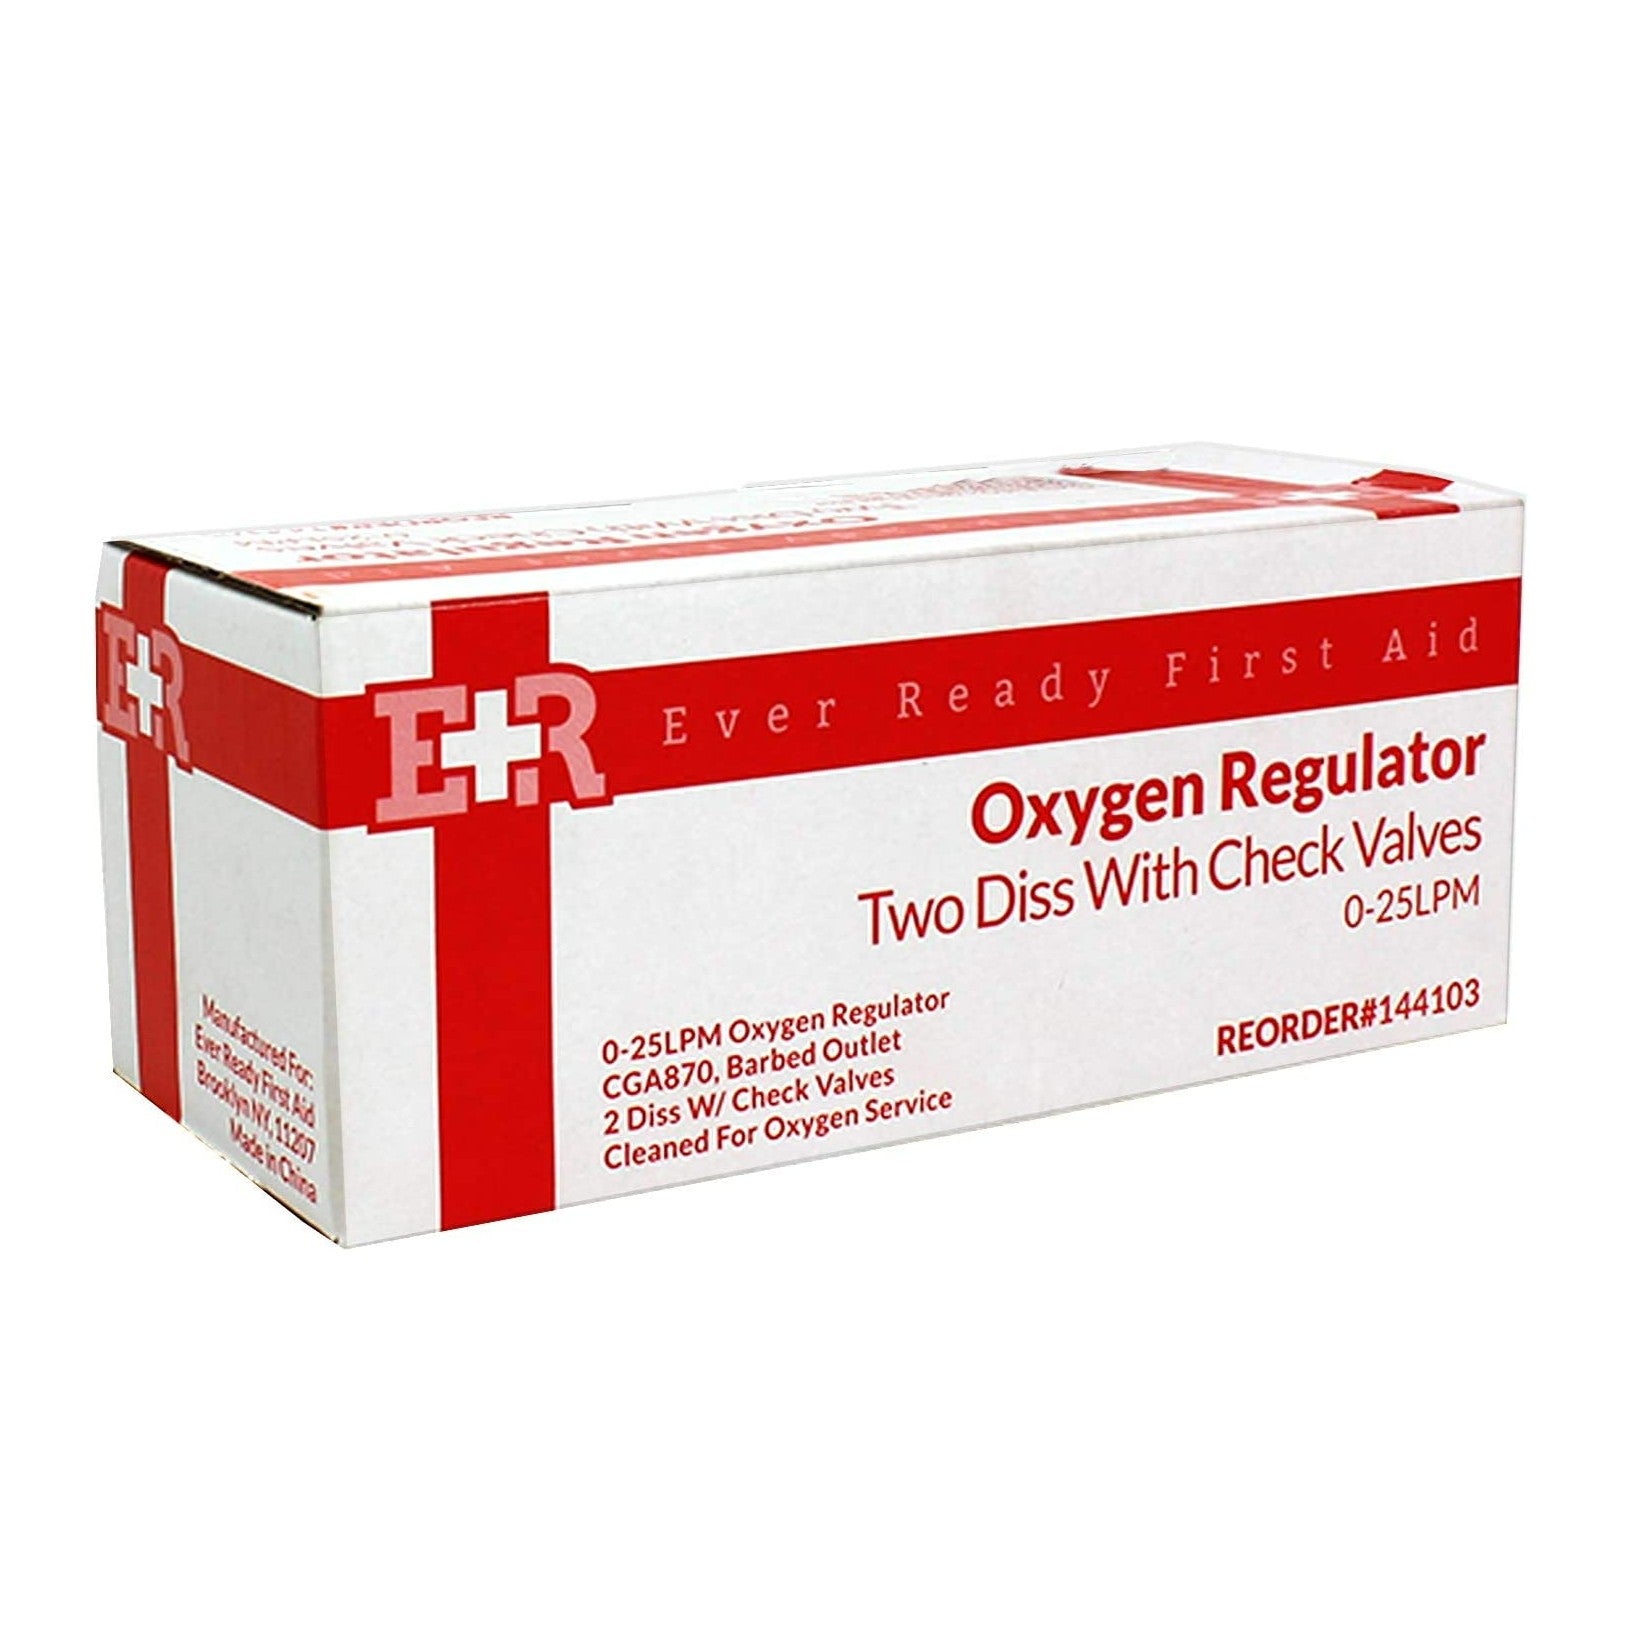 Ever Ready First Aid Oxygen Regulator CGA-870 Gauge Flow Rate - 0-25LPM